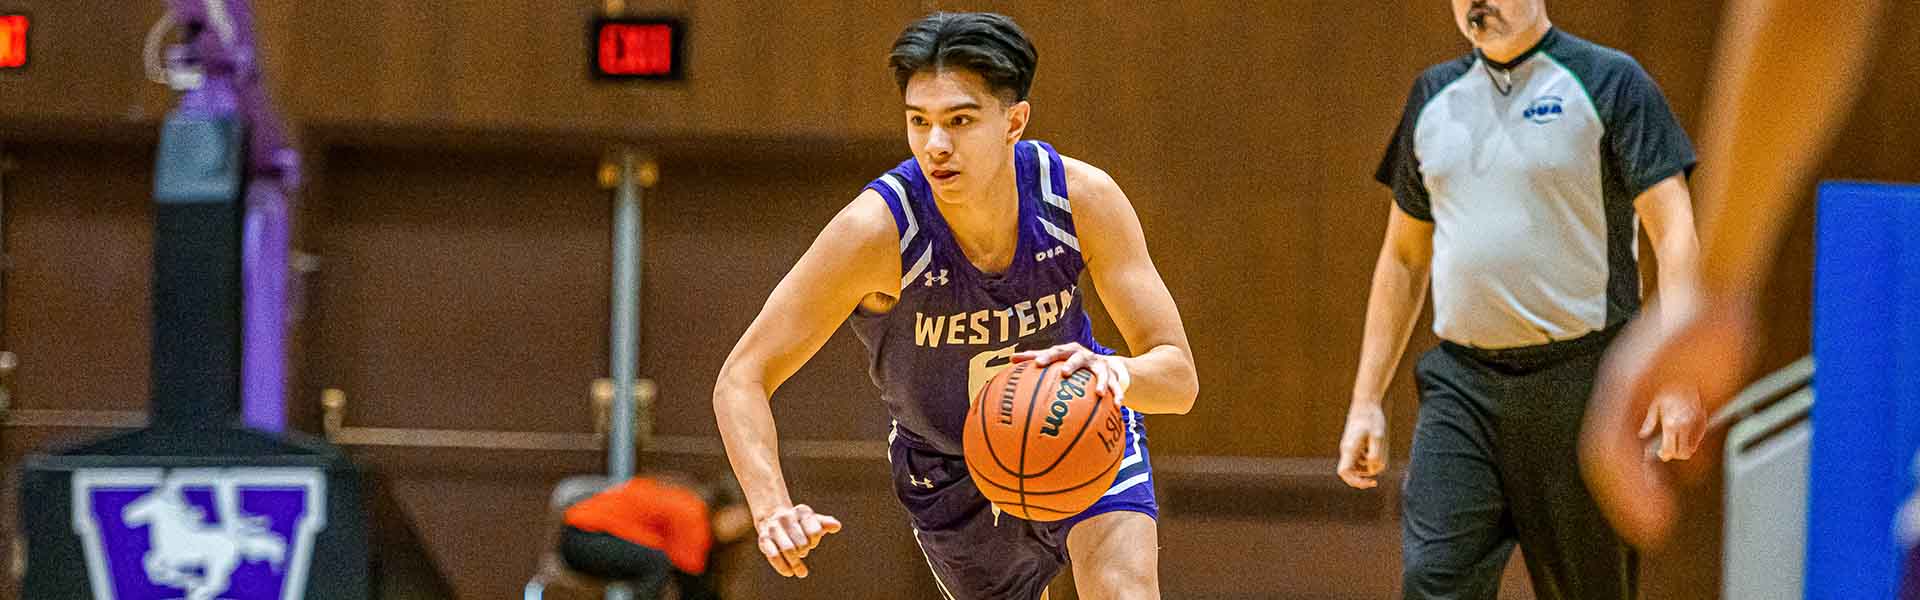 Western Mustangs men’s basketball player dribbling the ball